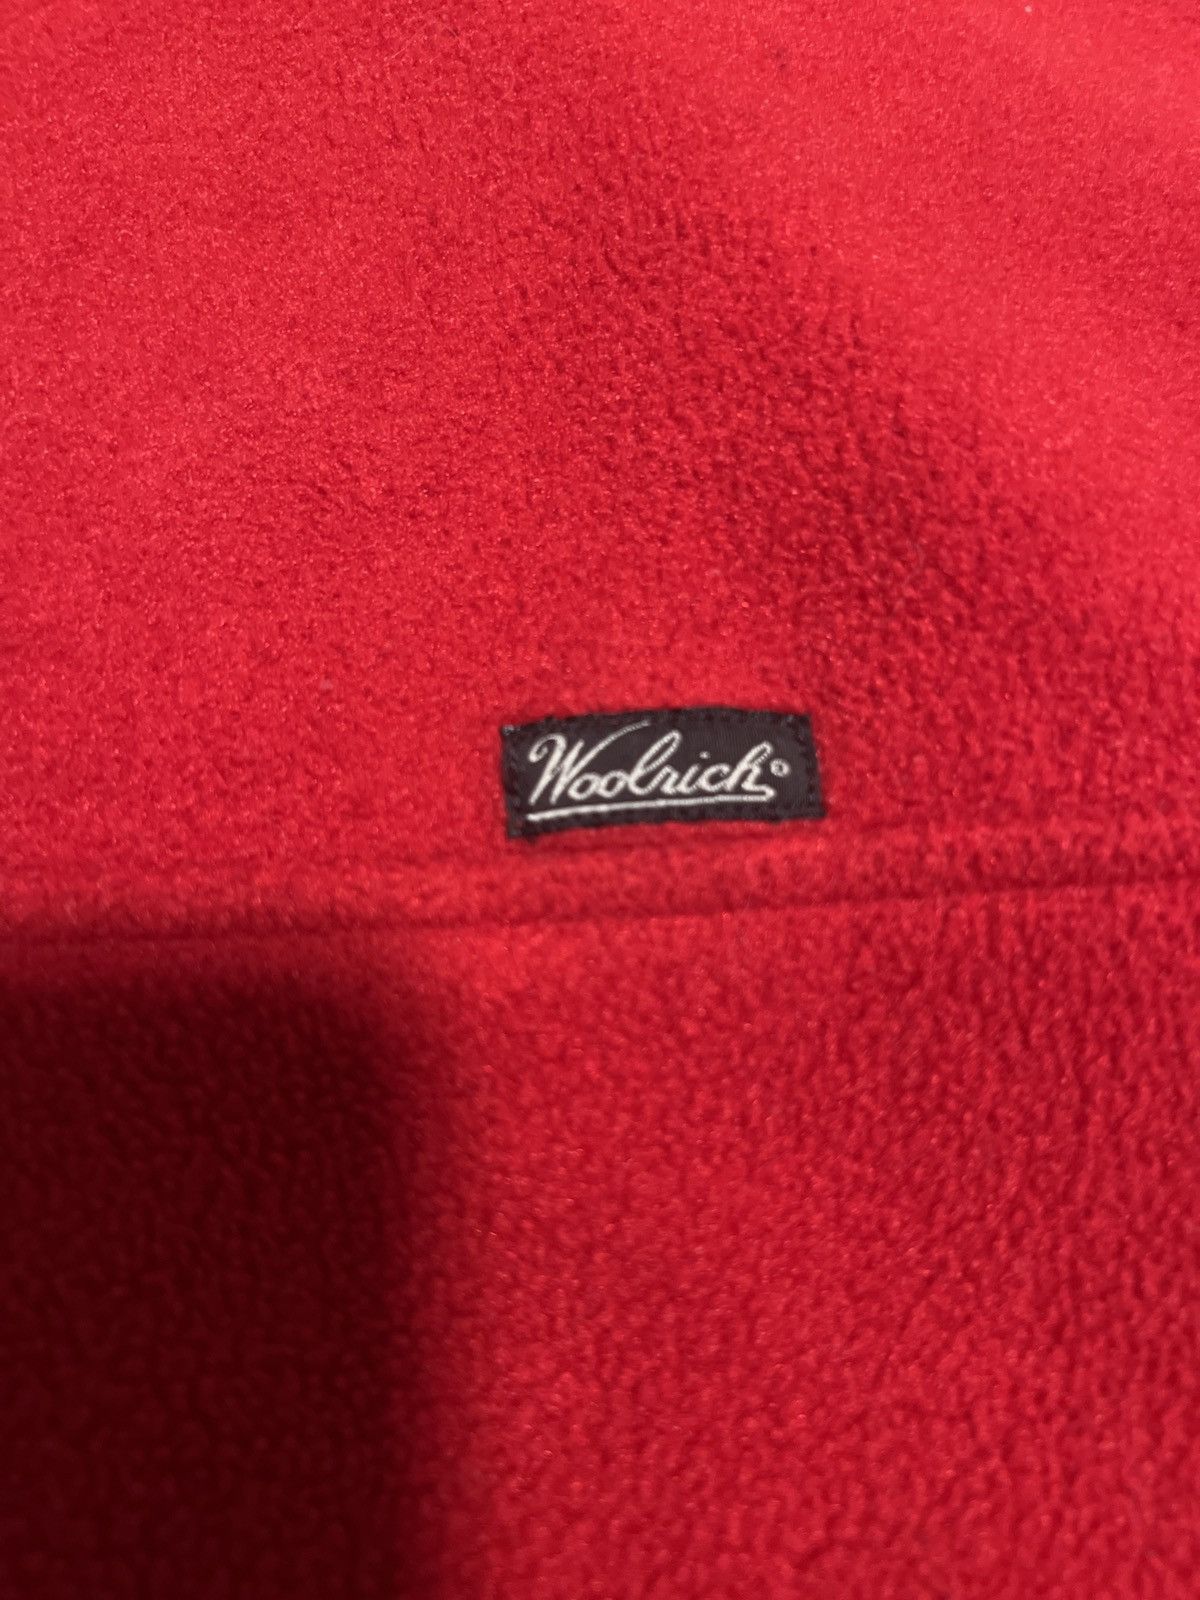 Vintage Vintage Made in USA Woolrich Polartec Jacket Size L Size US L / EU 52-54 / 3 - 2 Preview